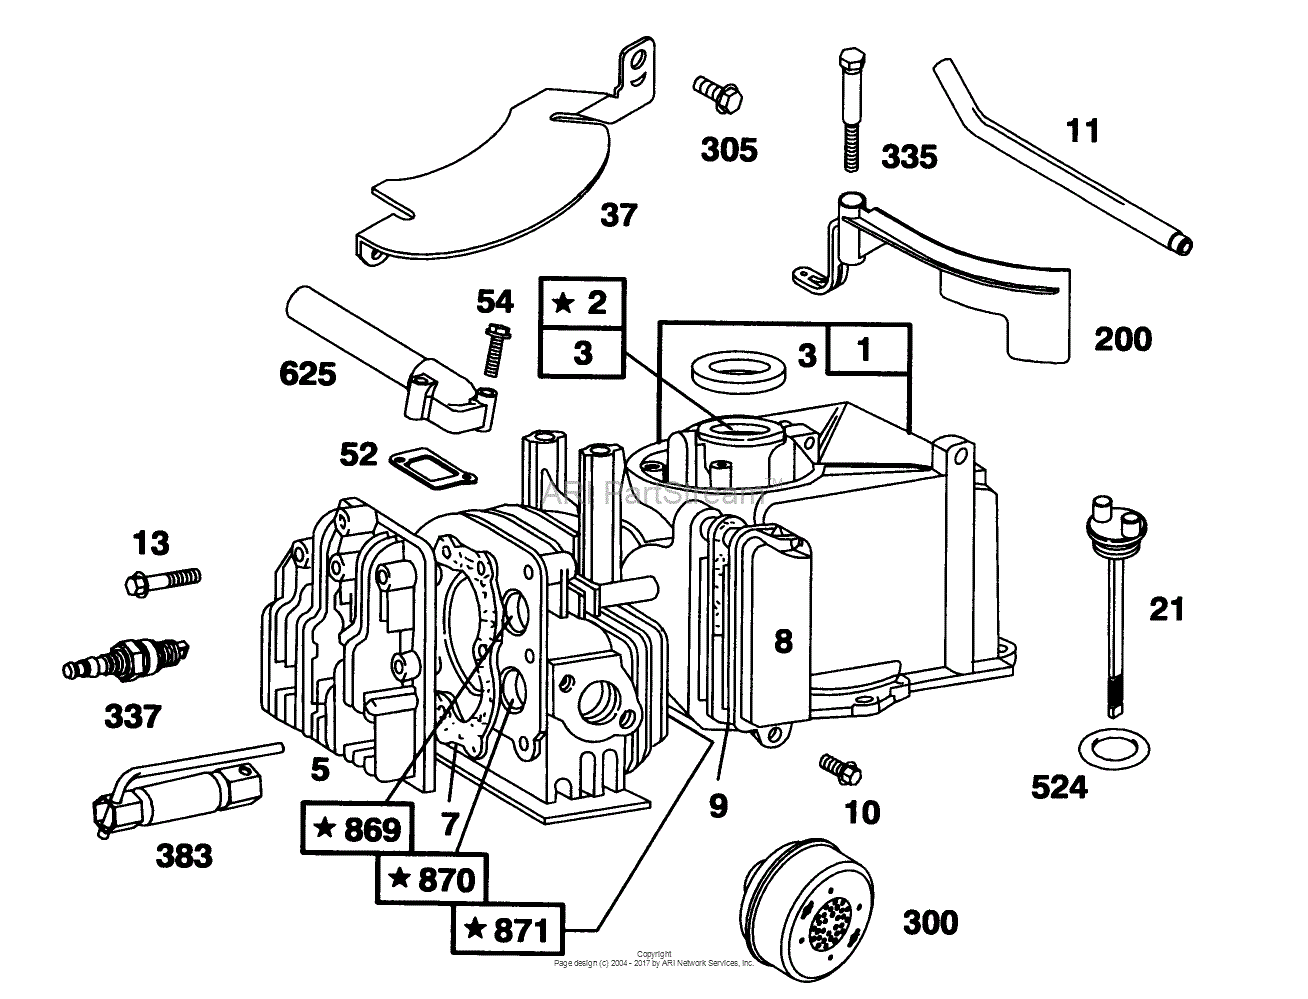 Toro 20432, Lawnmower, 1993 (SN 39000001-39999999) Parts Diagram for ENGINE  BRIGGS & STRATTON MODEL 95902-3154-01